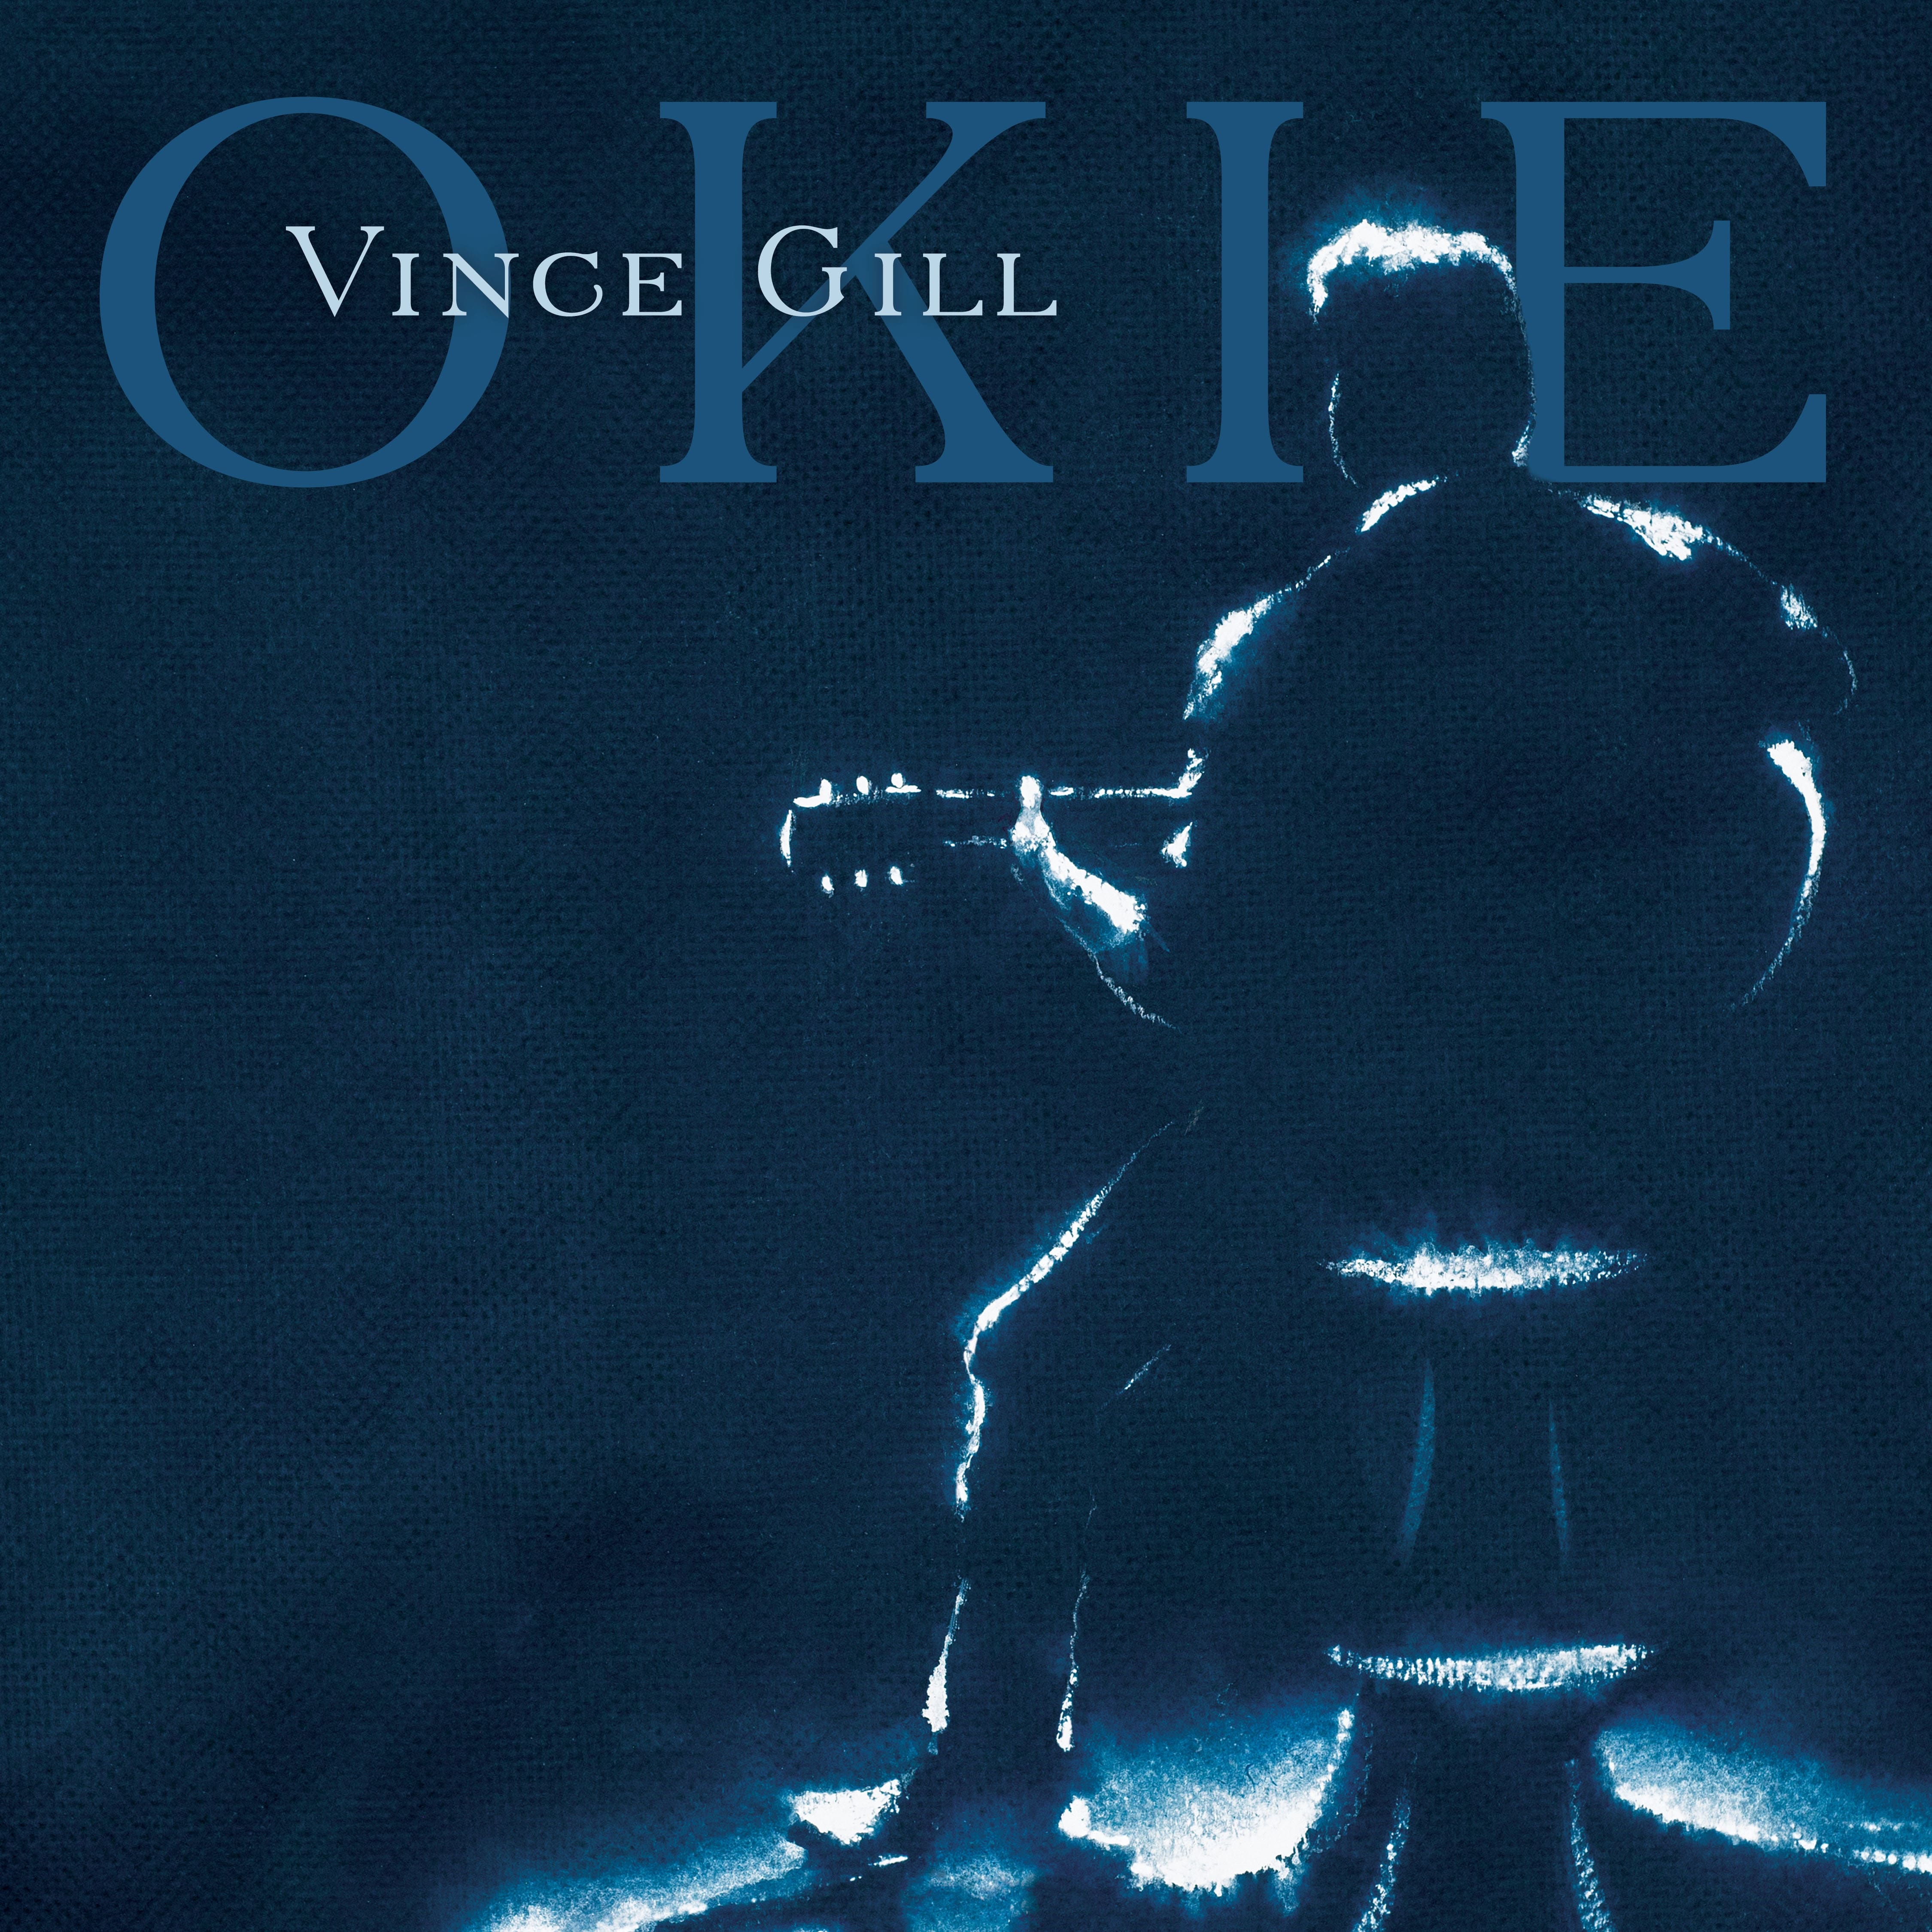 Vince Gill; Artwork courtesy of Universal Music Group Nashville